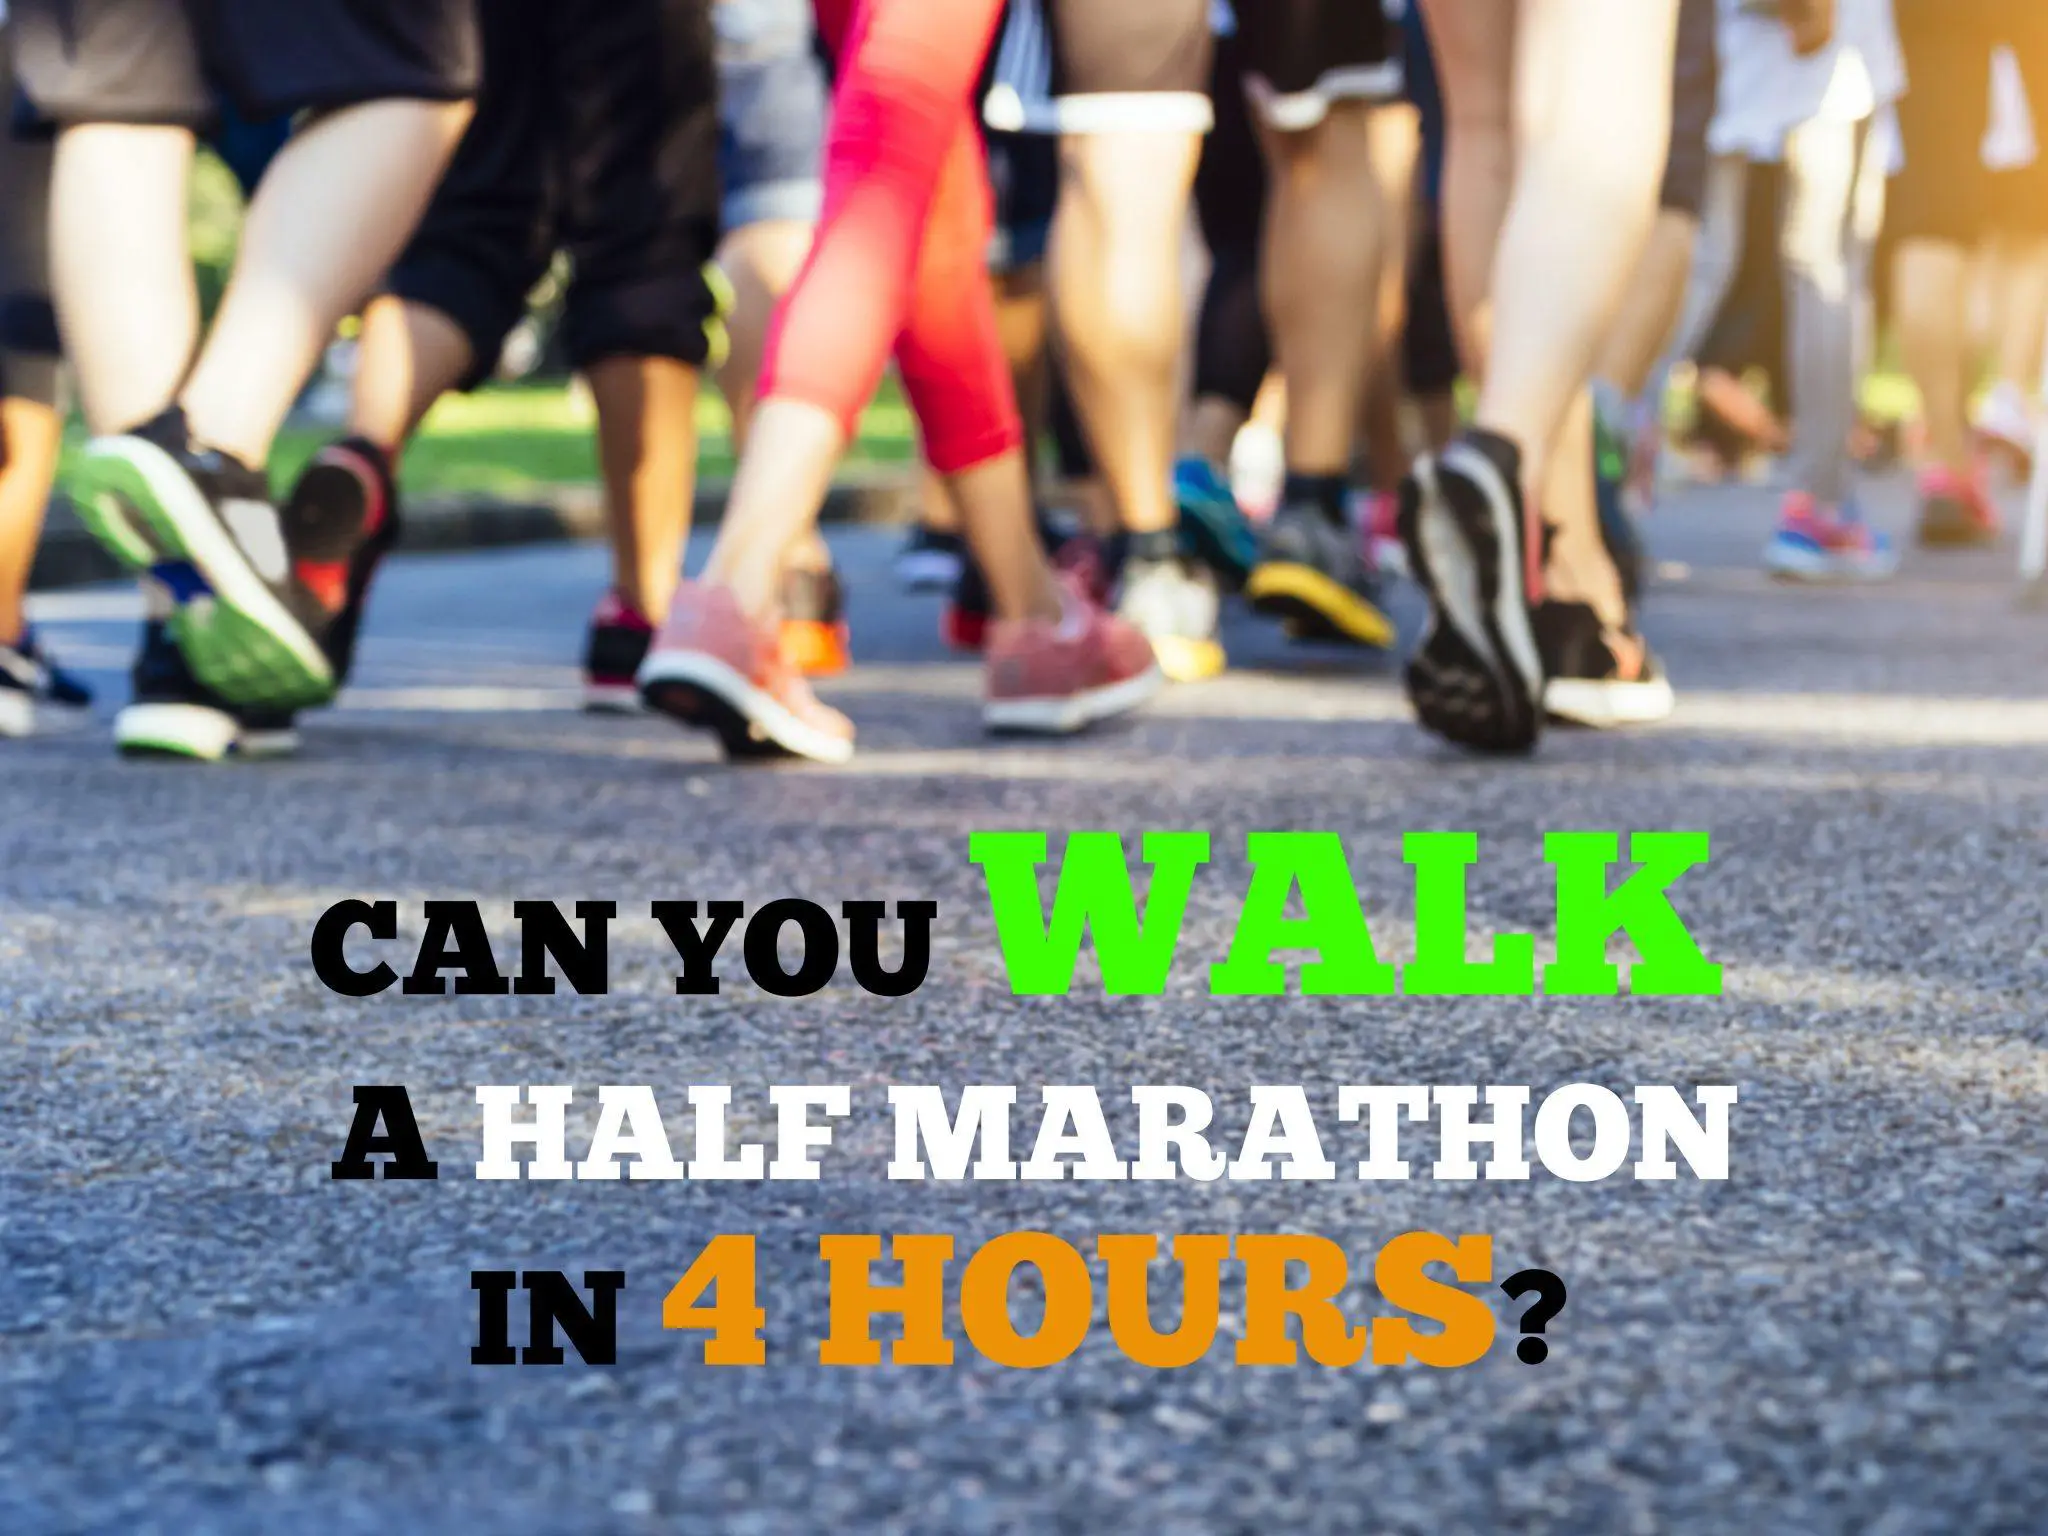 Can you walk a half marathon in 4 hours